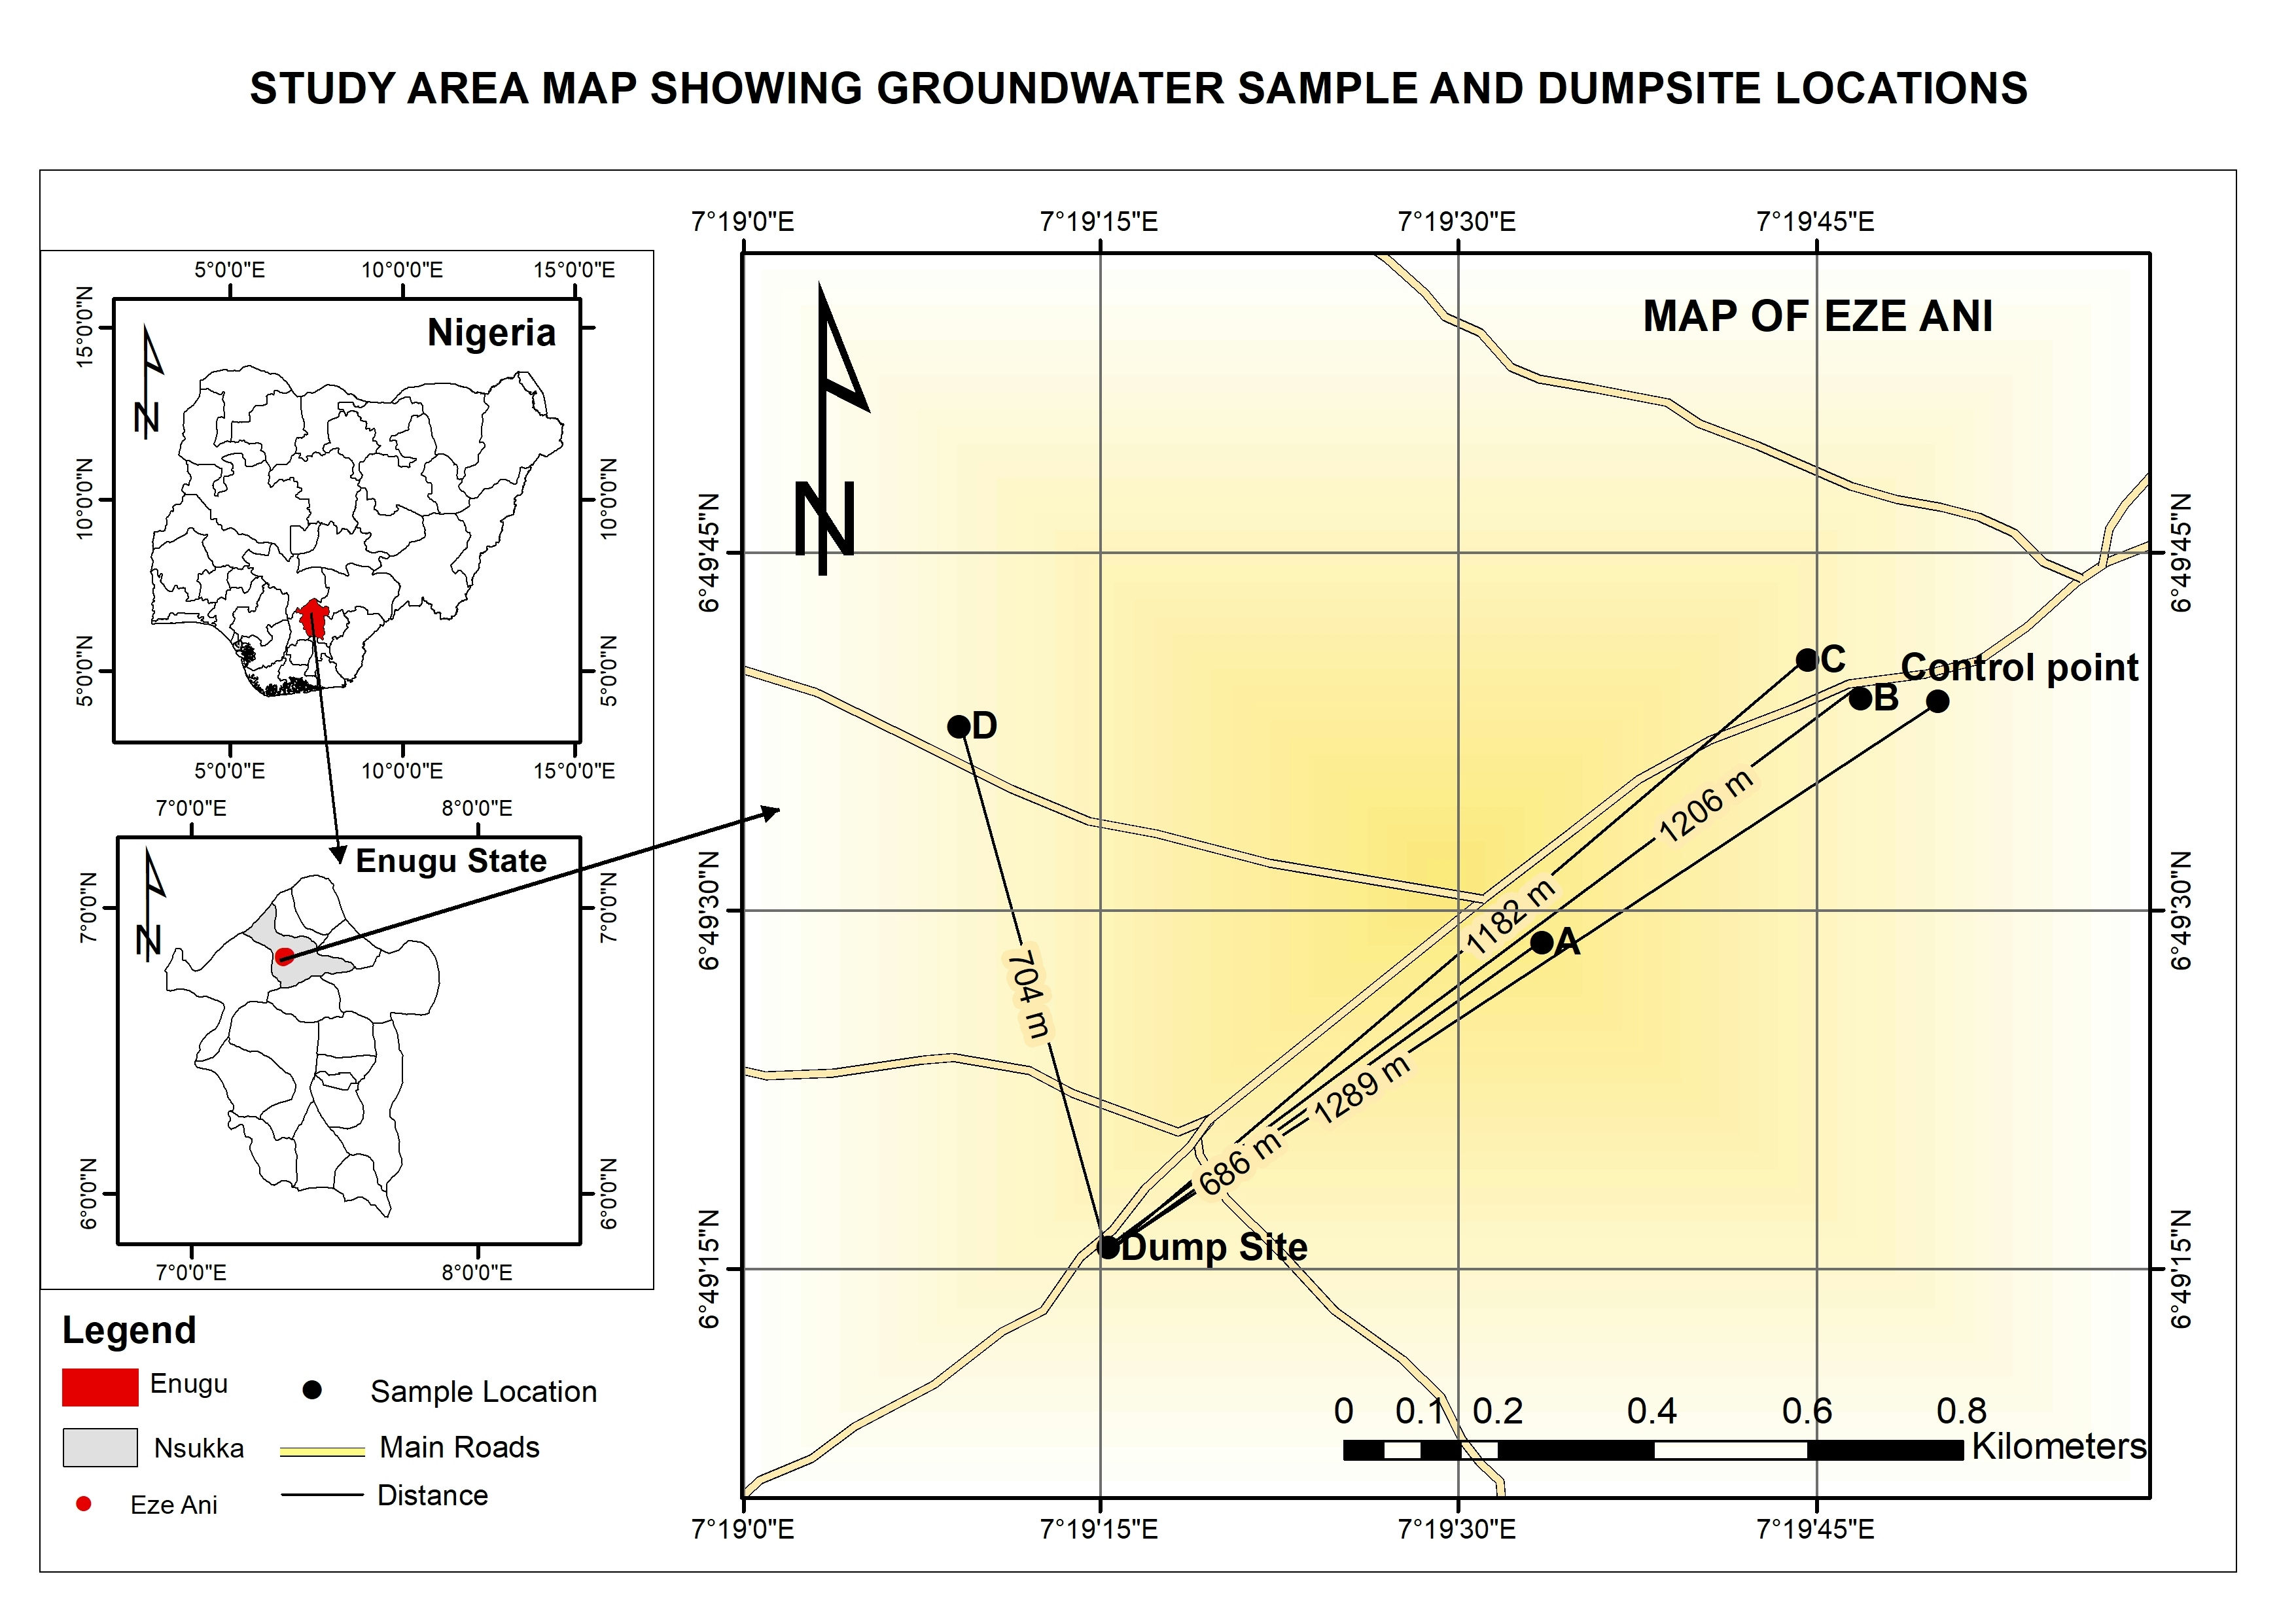 EzeAni Groundwater Quality